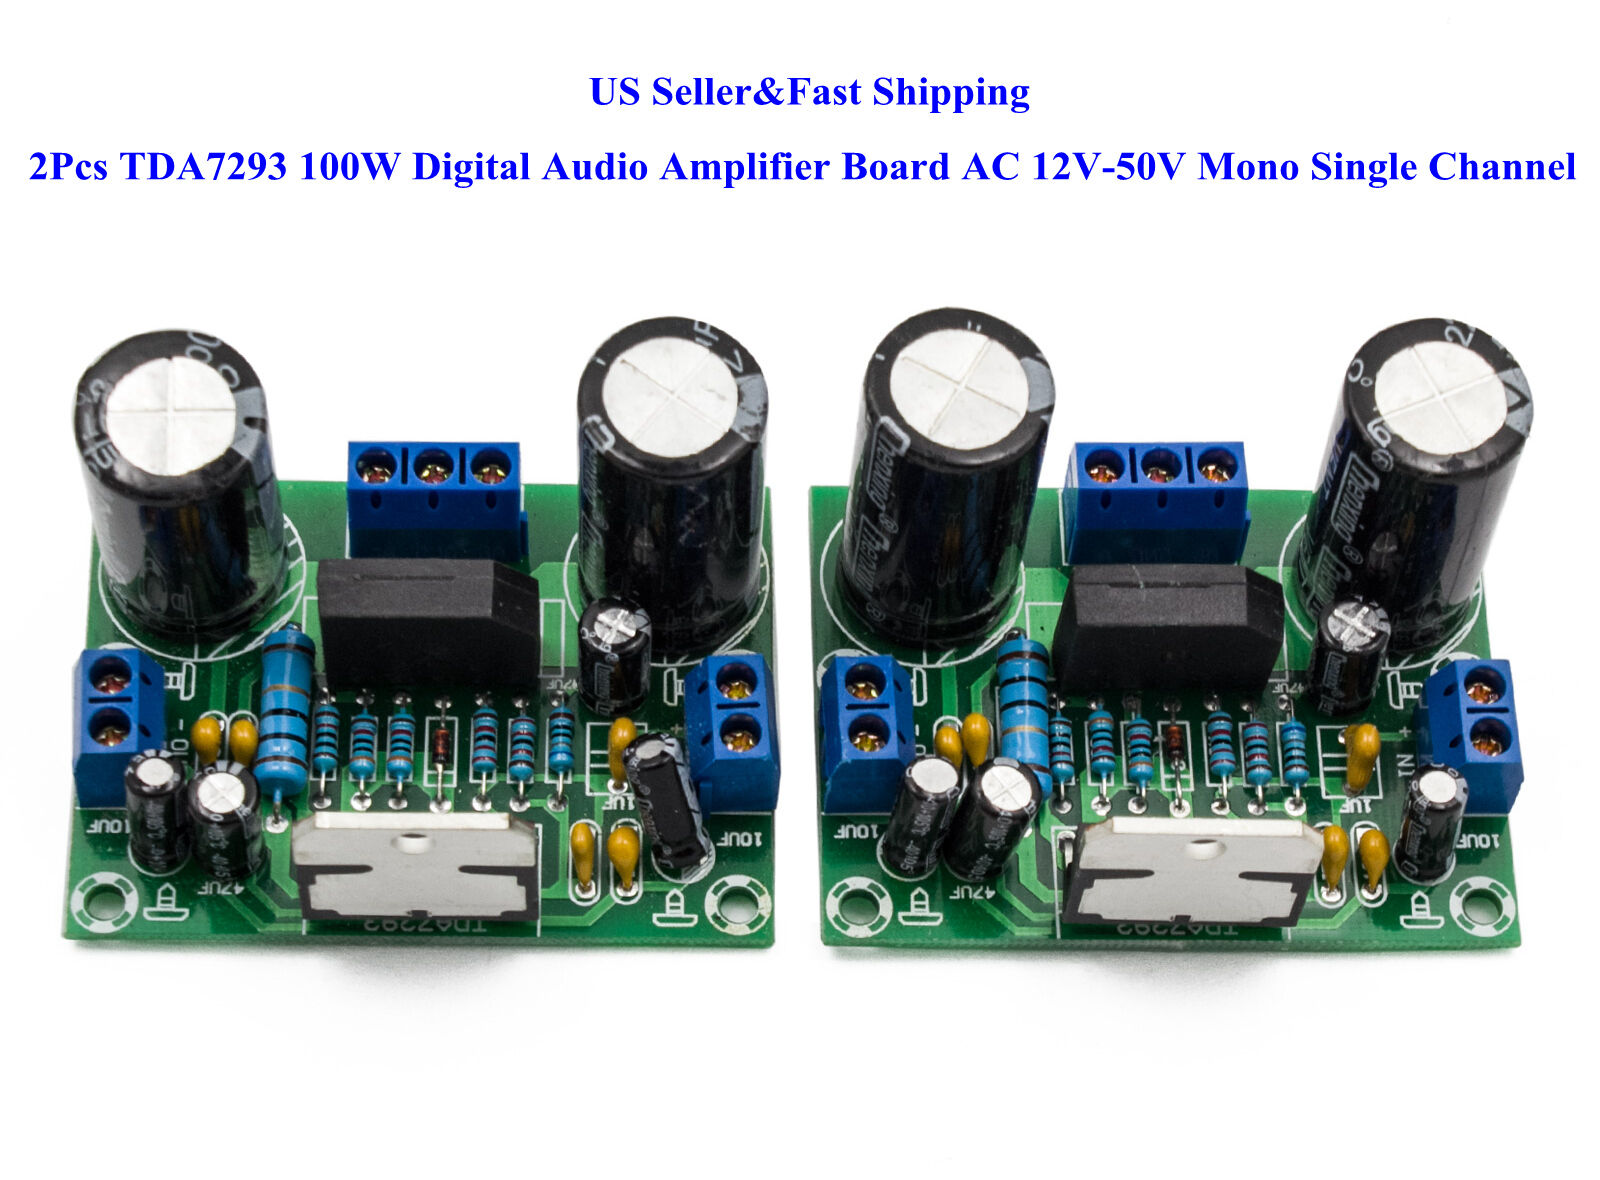 2pcs Tda7293 100w Digital Audio Amplifier Board Ac 12v-50v Mono Single Channel